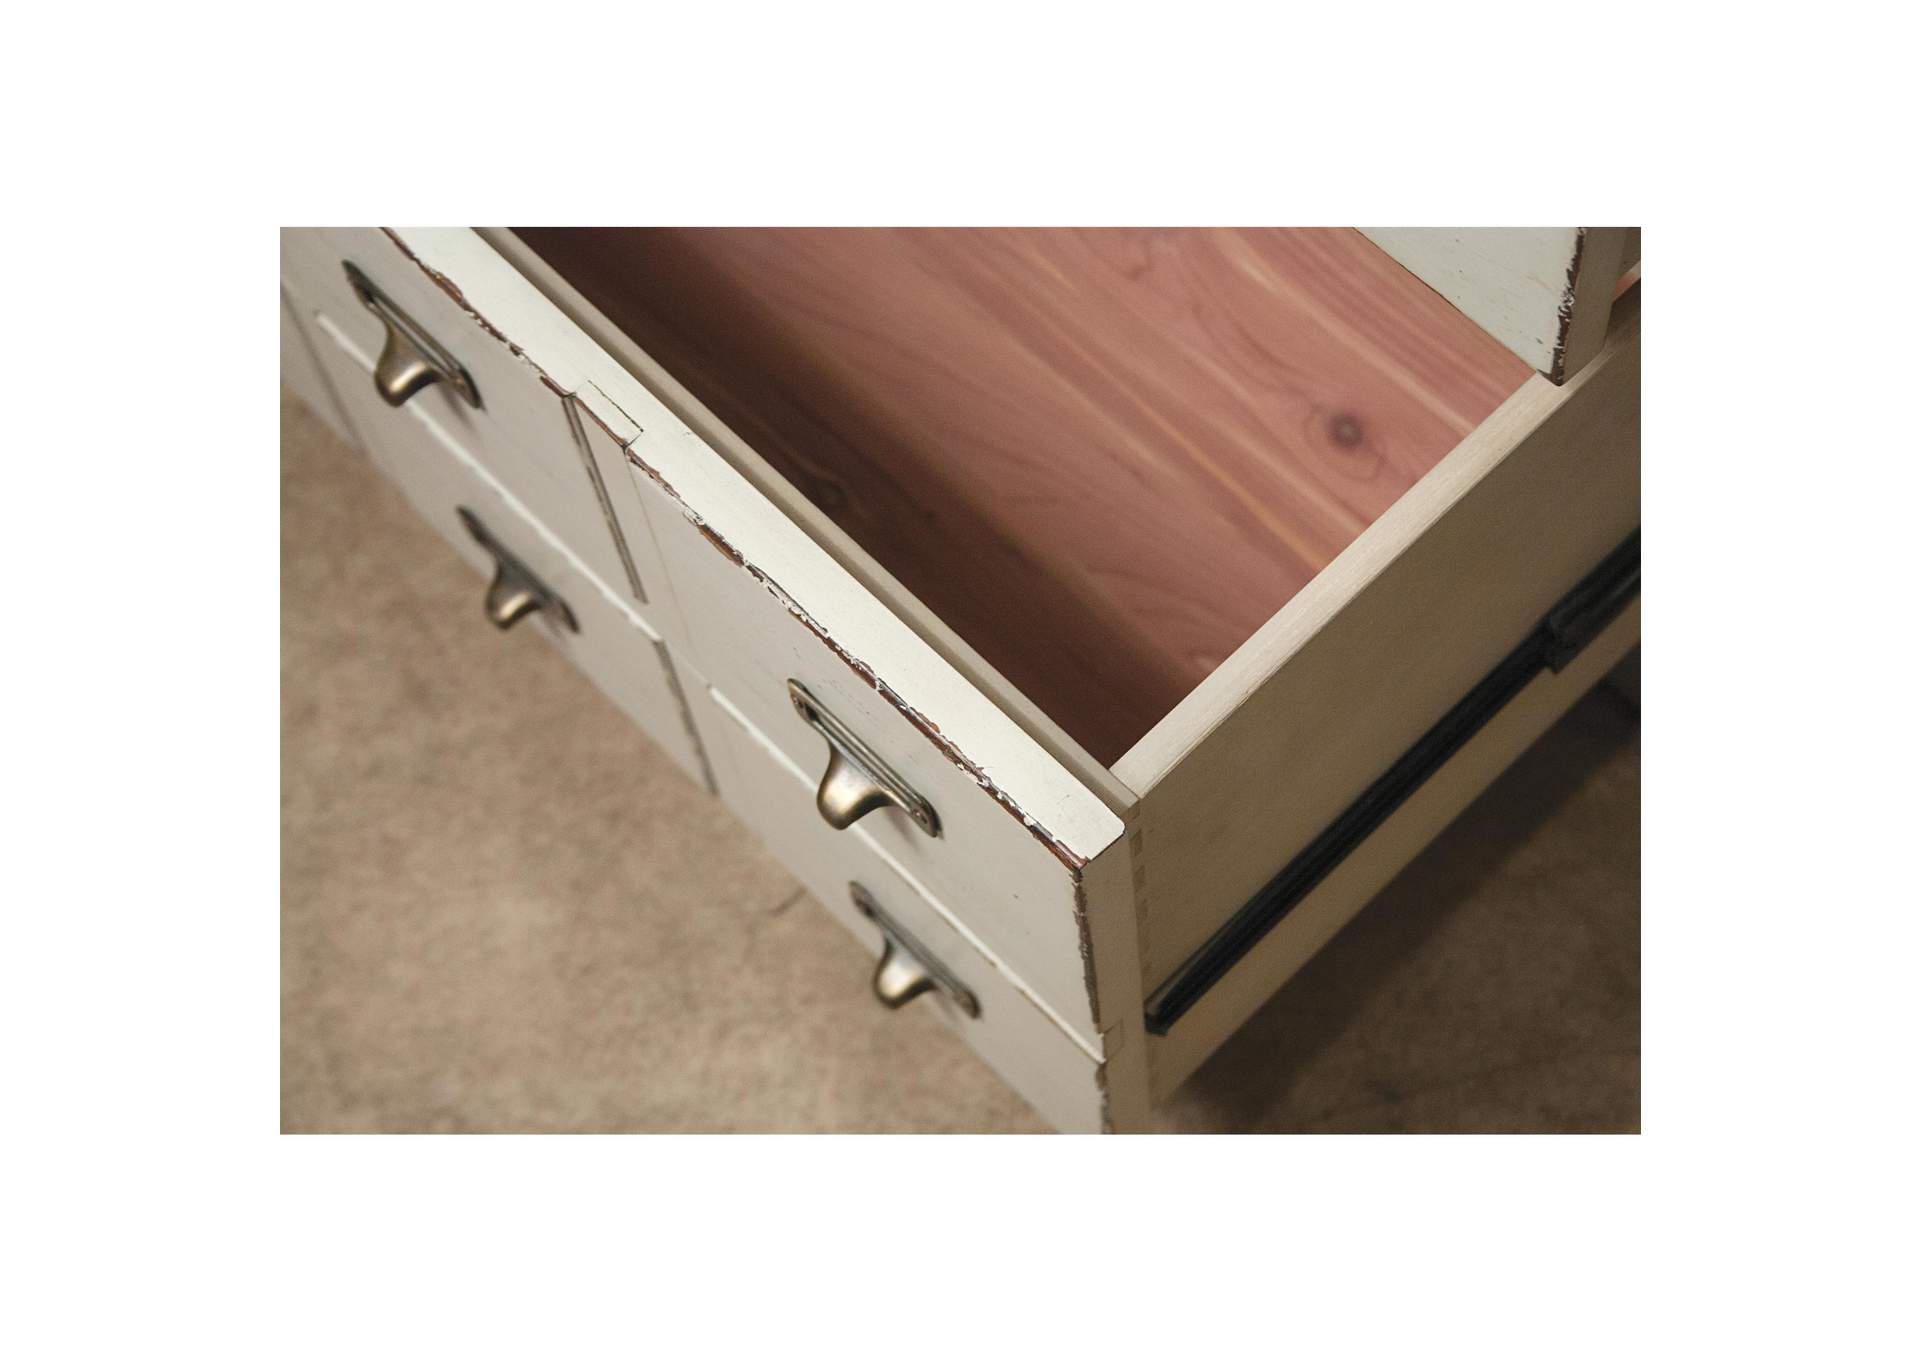 Huntleigh Vintage White 2-drawer Nightstand,Riverside